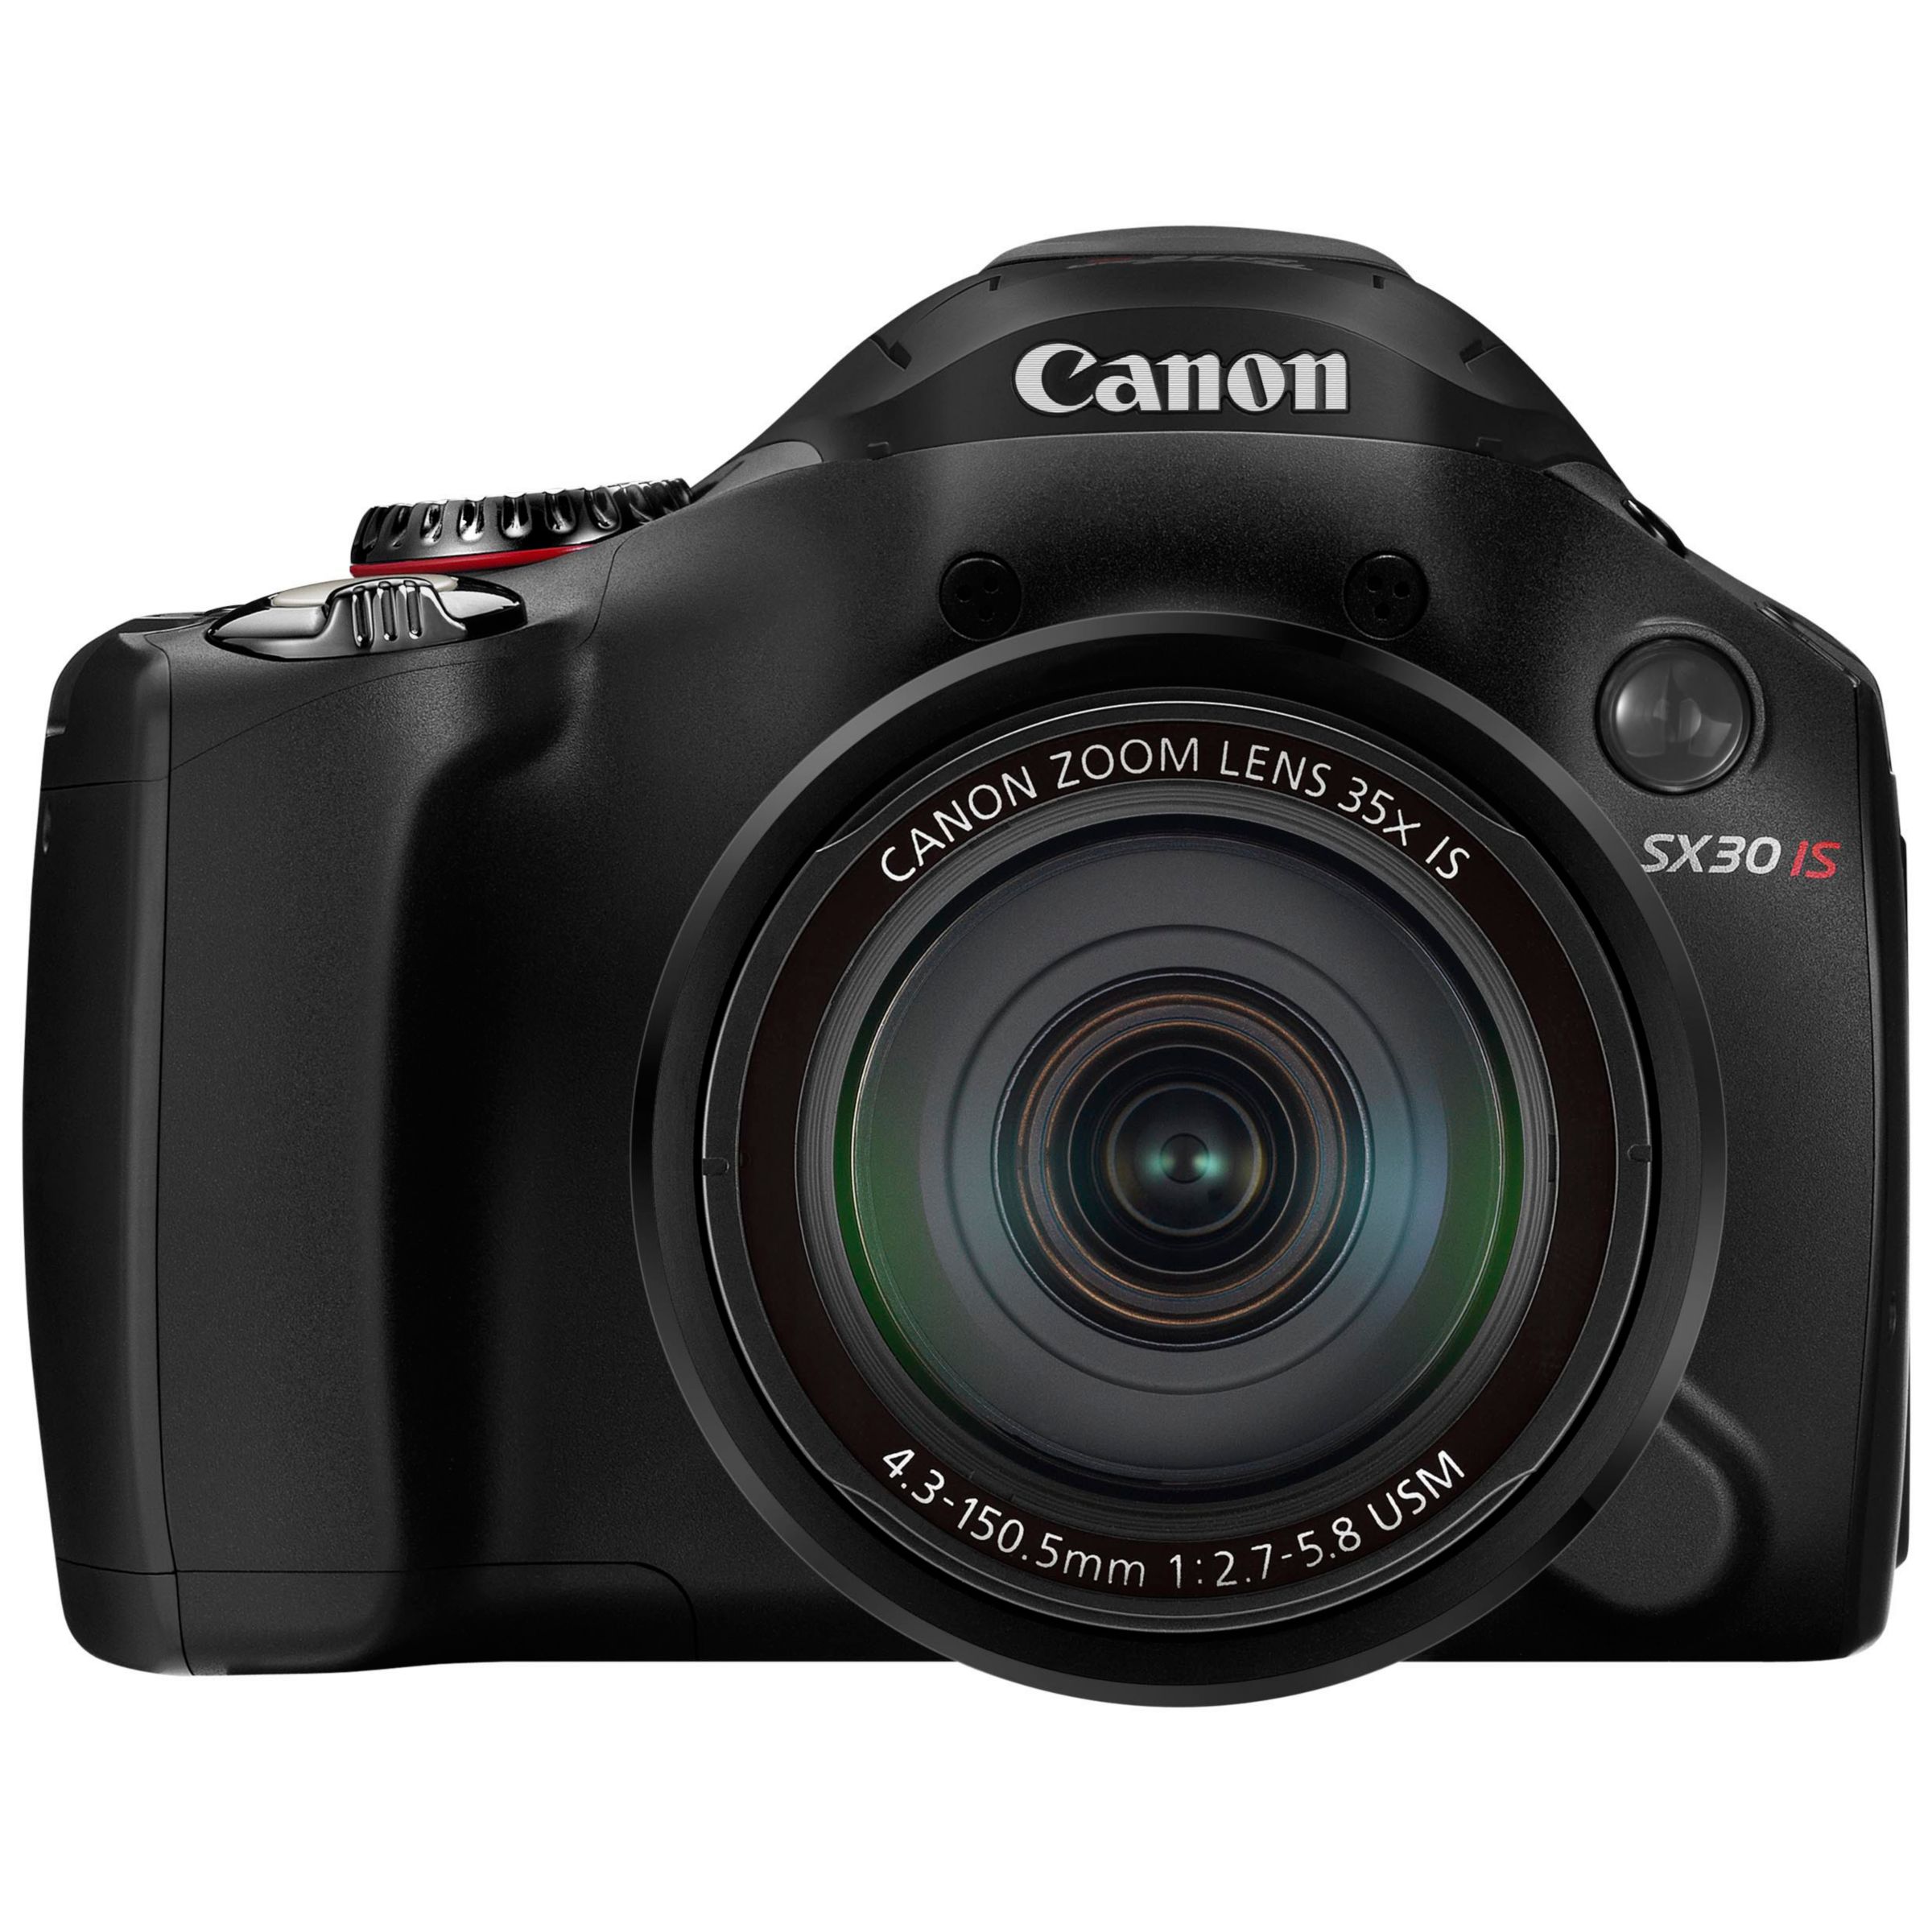 Canon Powershot SX30 IS Digital Camera, Black at John Lewis